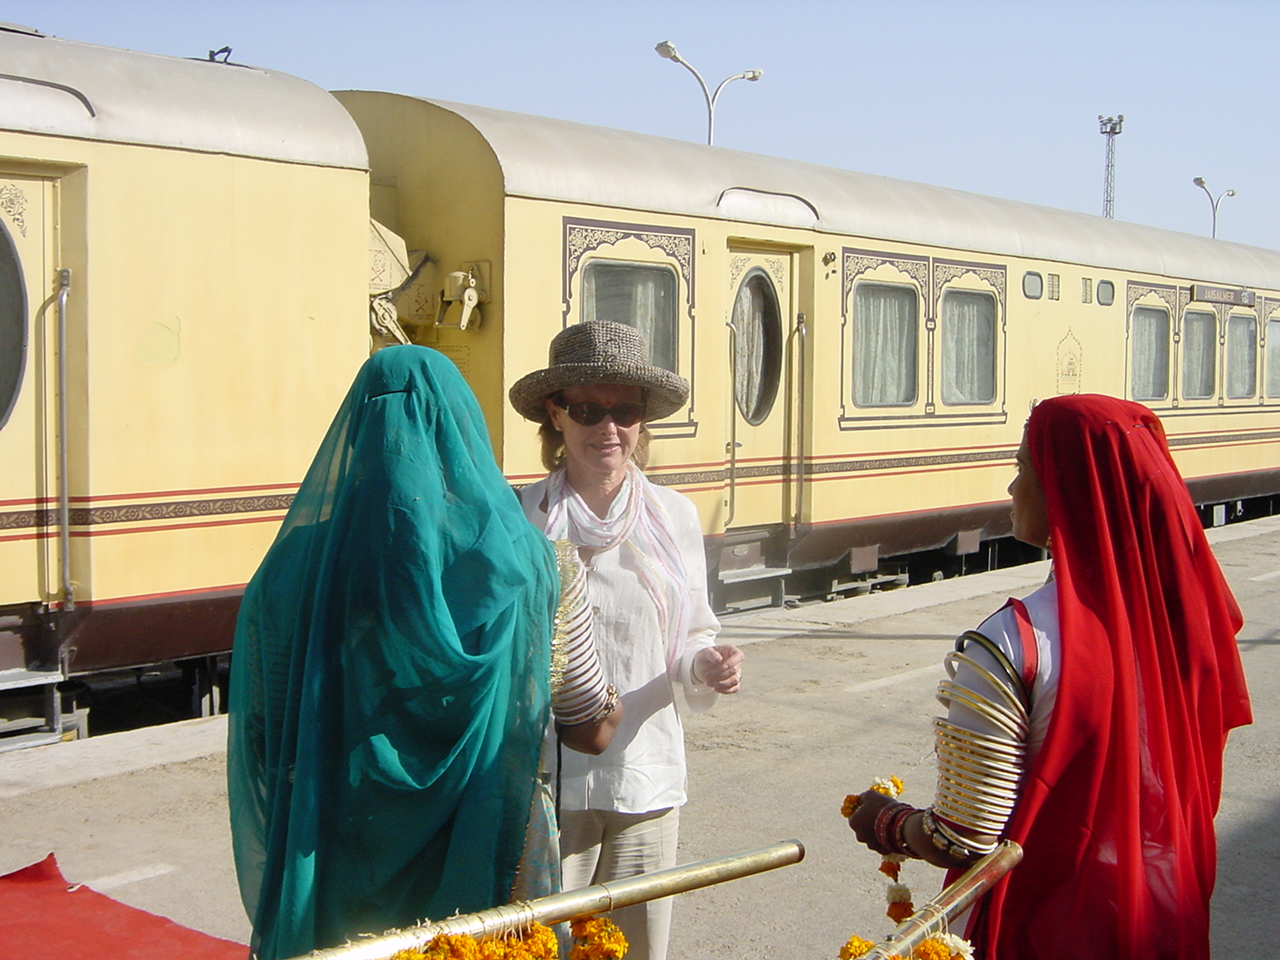 India – A Train Trip in Rajasthan